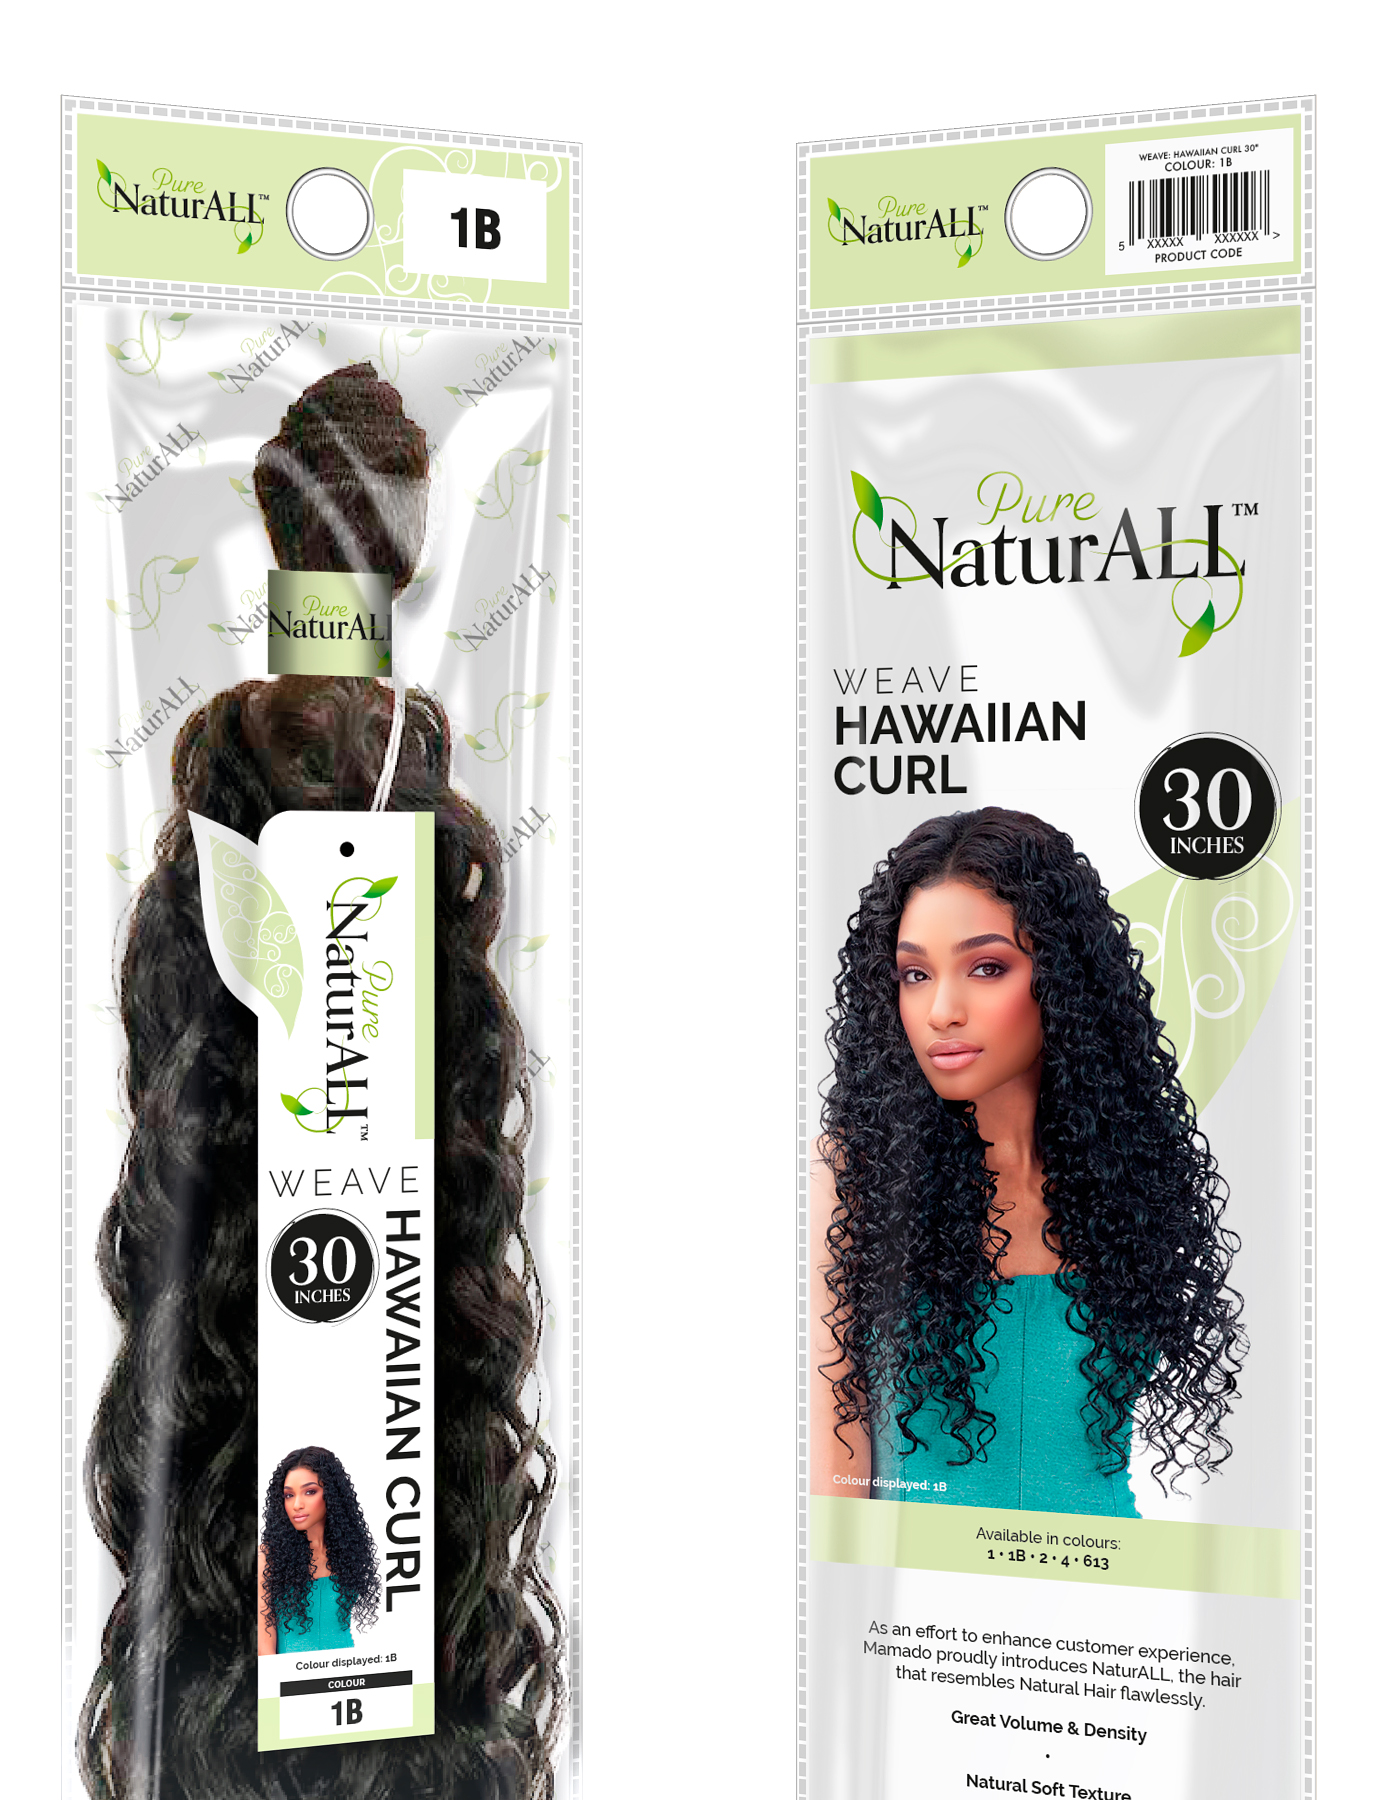 NaturALL hair brand visual identity design by Paul Cartwright Branding.